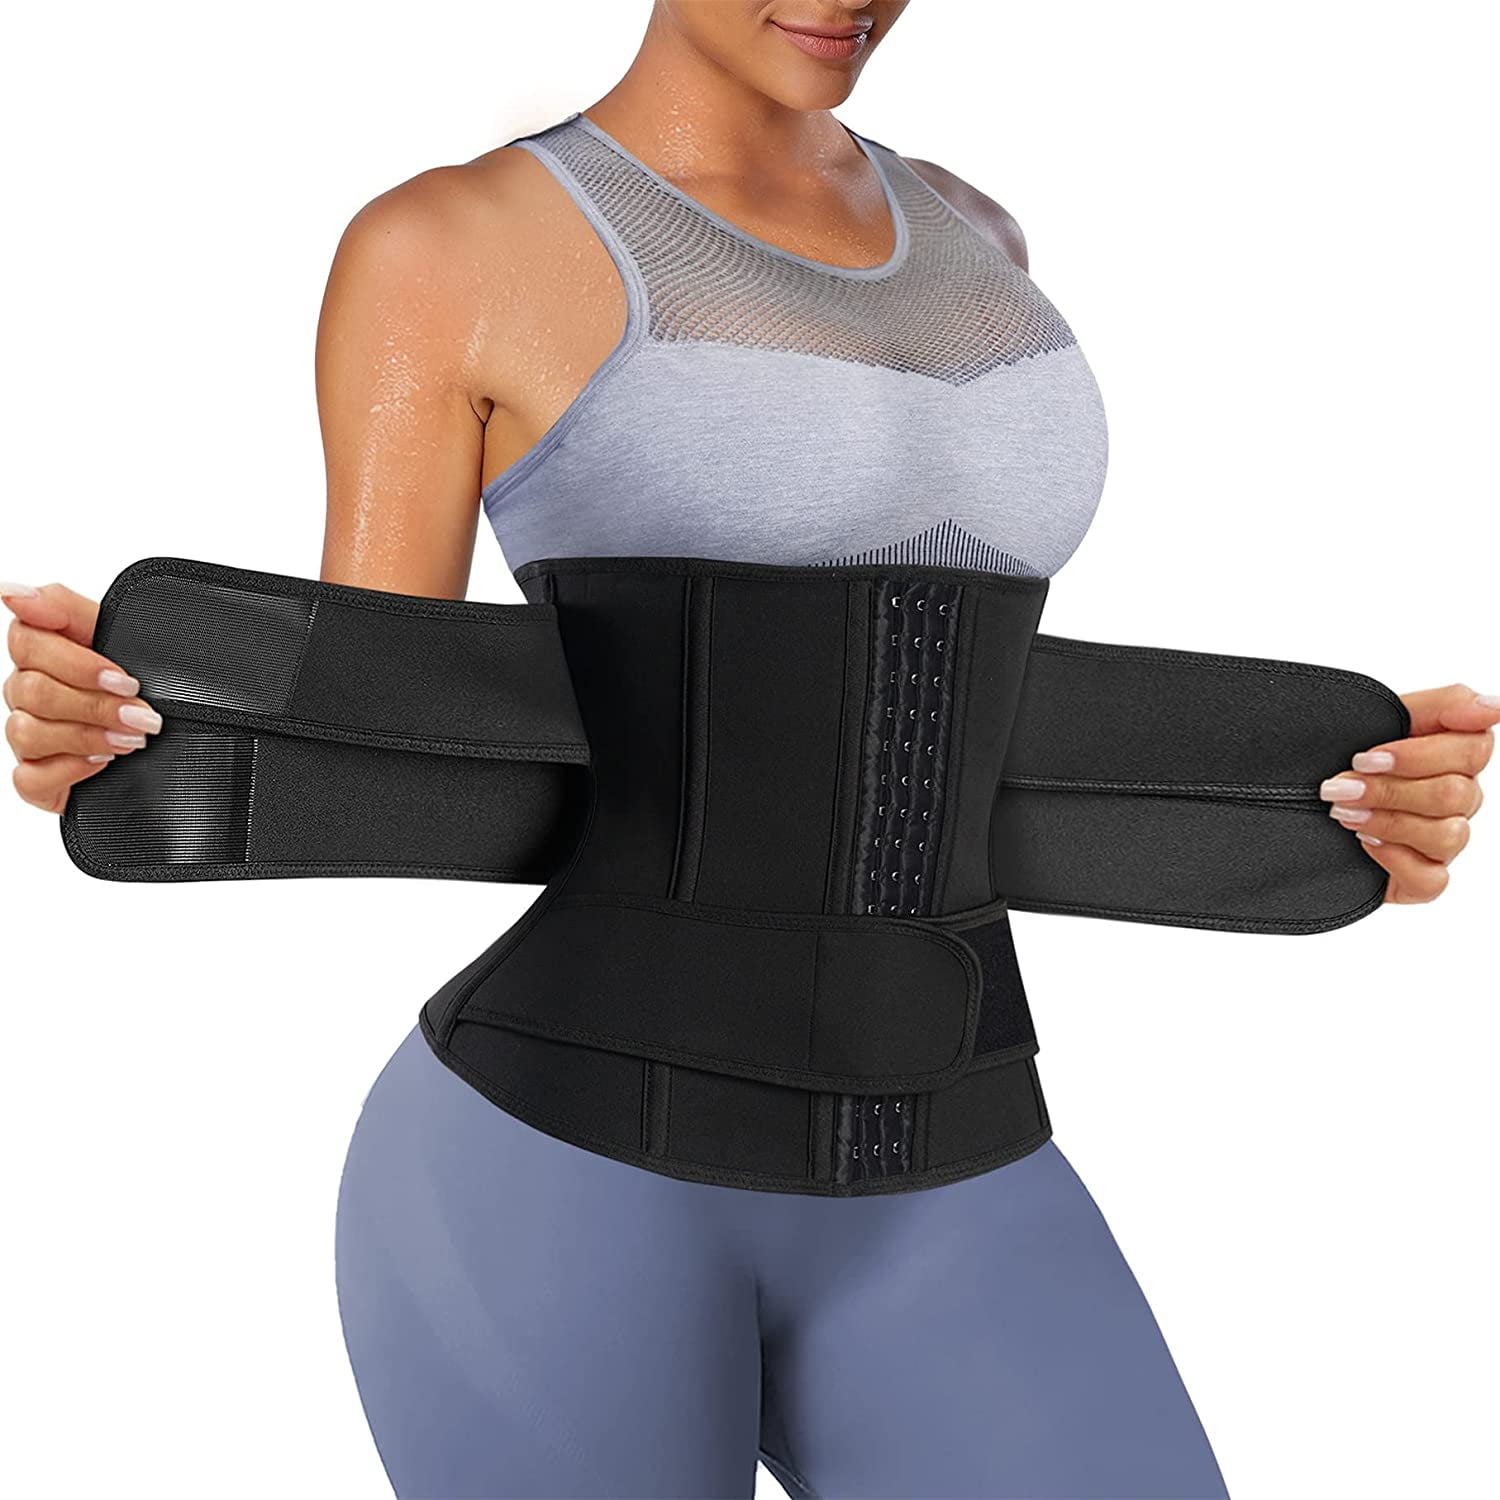 YIANNA Waist Trainer Slimming Body Shaper Belt Sport Girdle Waist Trimmer Compression Belly Weight Loss